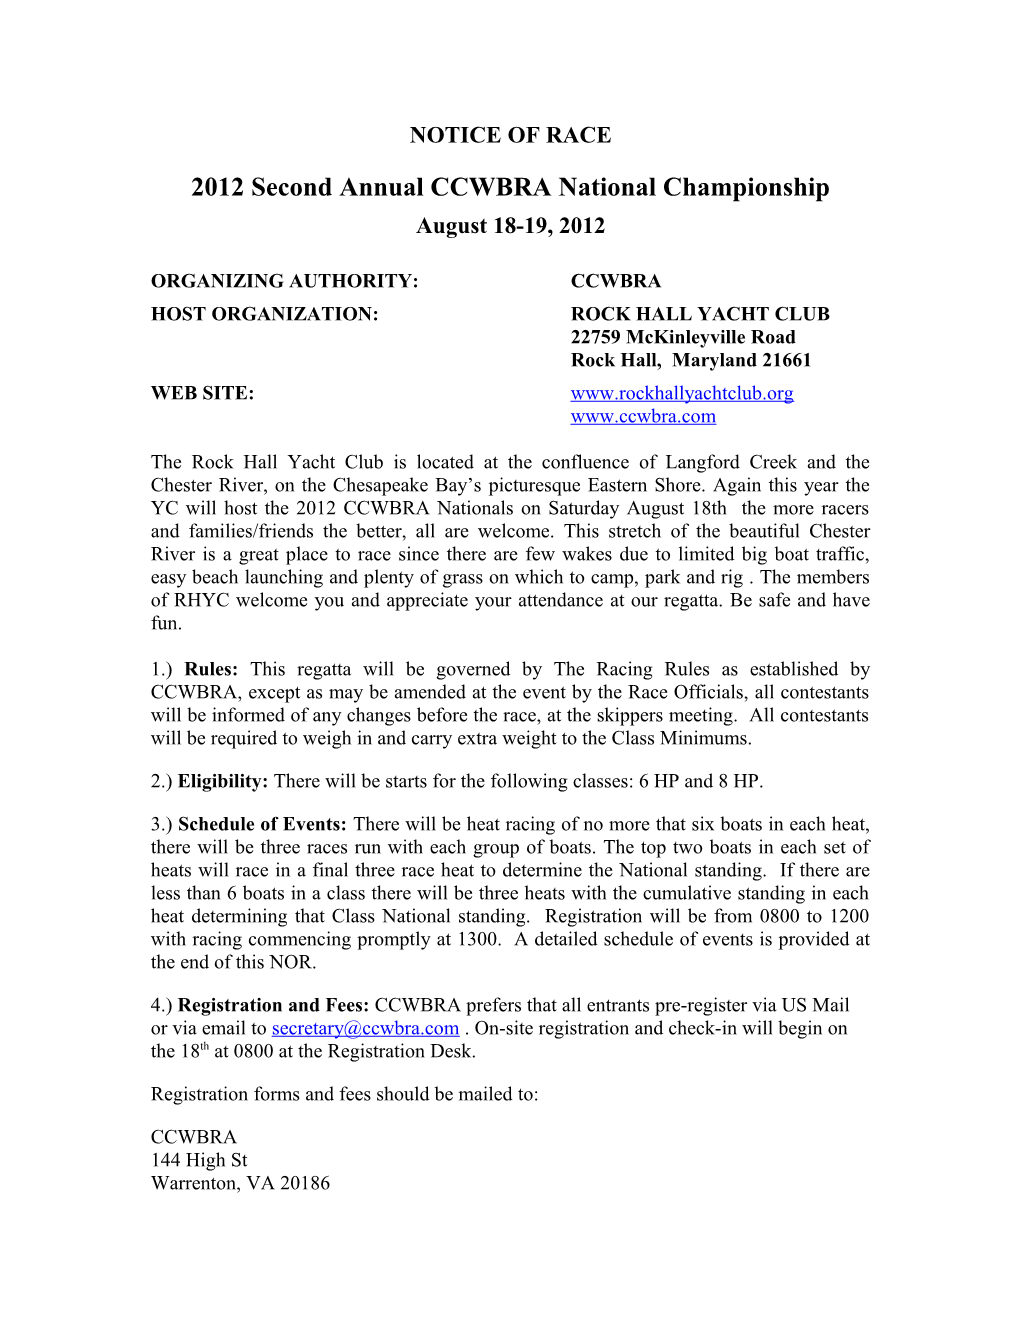 2012 Second Annual CCWBRA National Championship